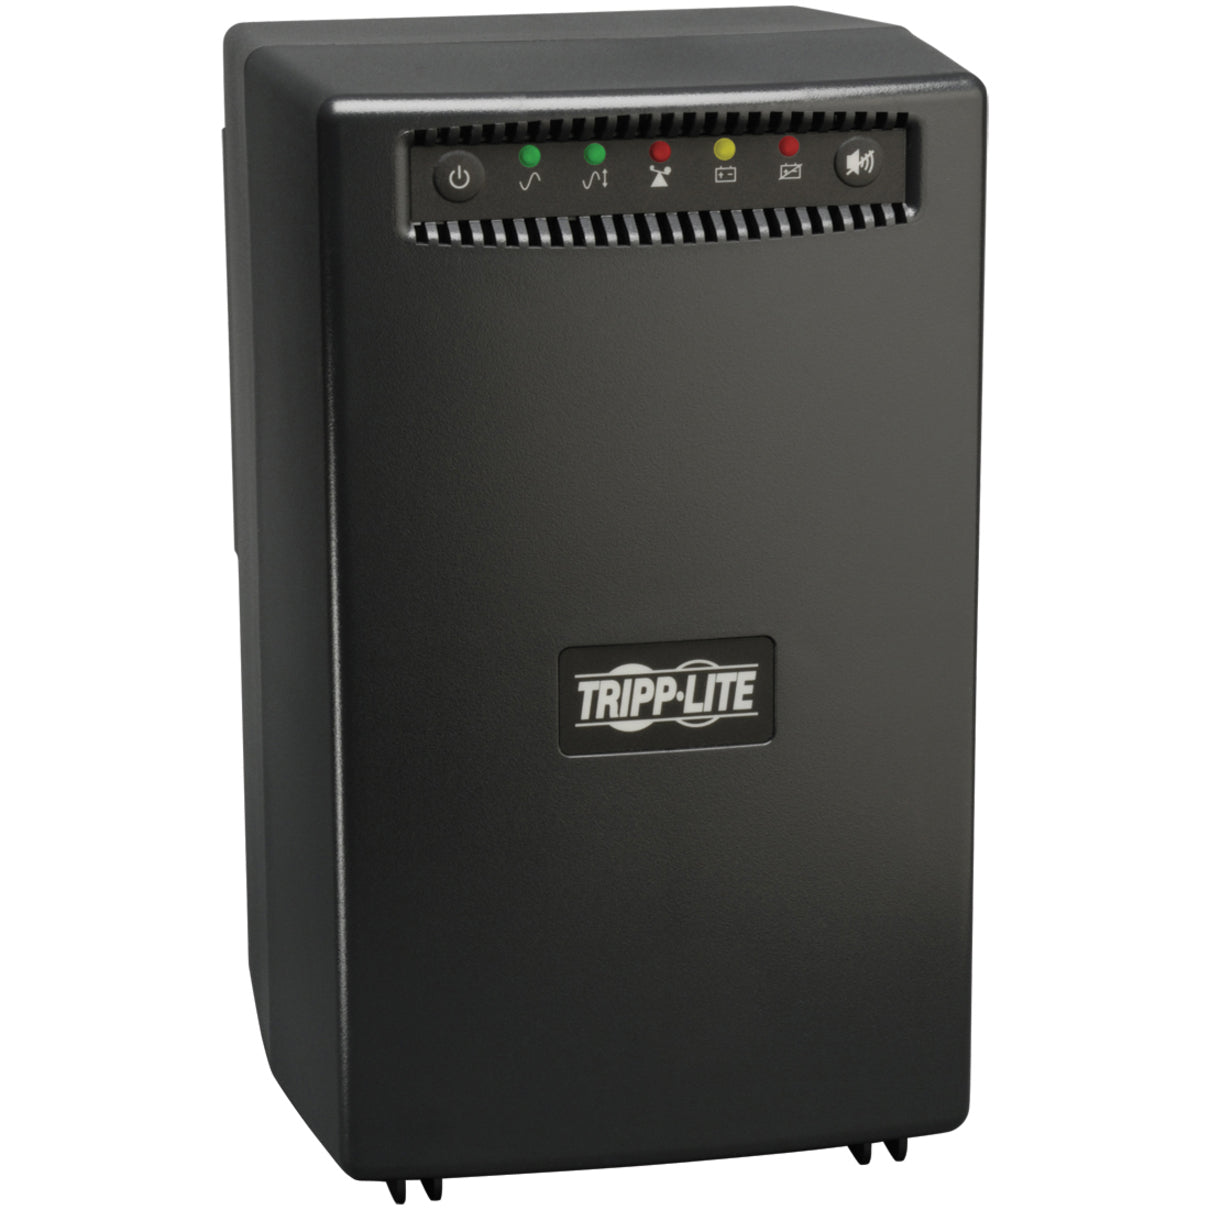 Tripp Lite OMNIVS1500 Omni 1500VA Line-Interactive UPS, Corrects Brownouts, Modem/Fax/Ethernet Protection, USB Port